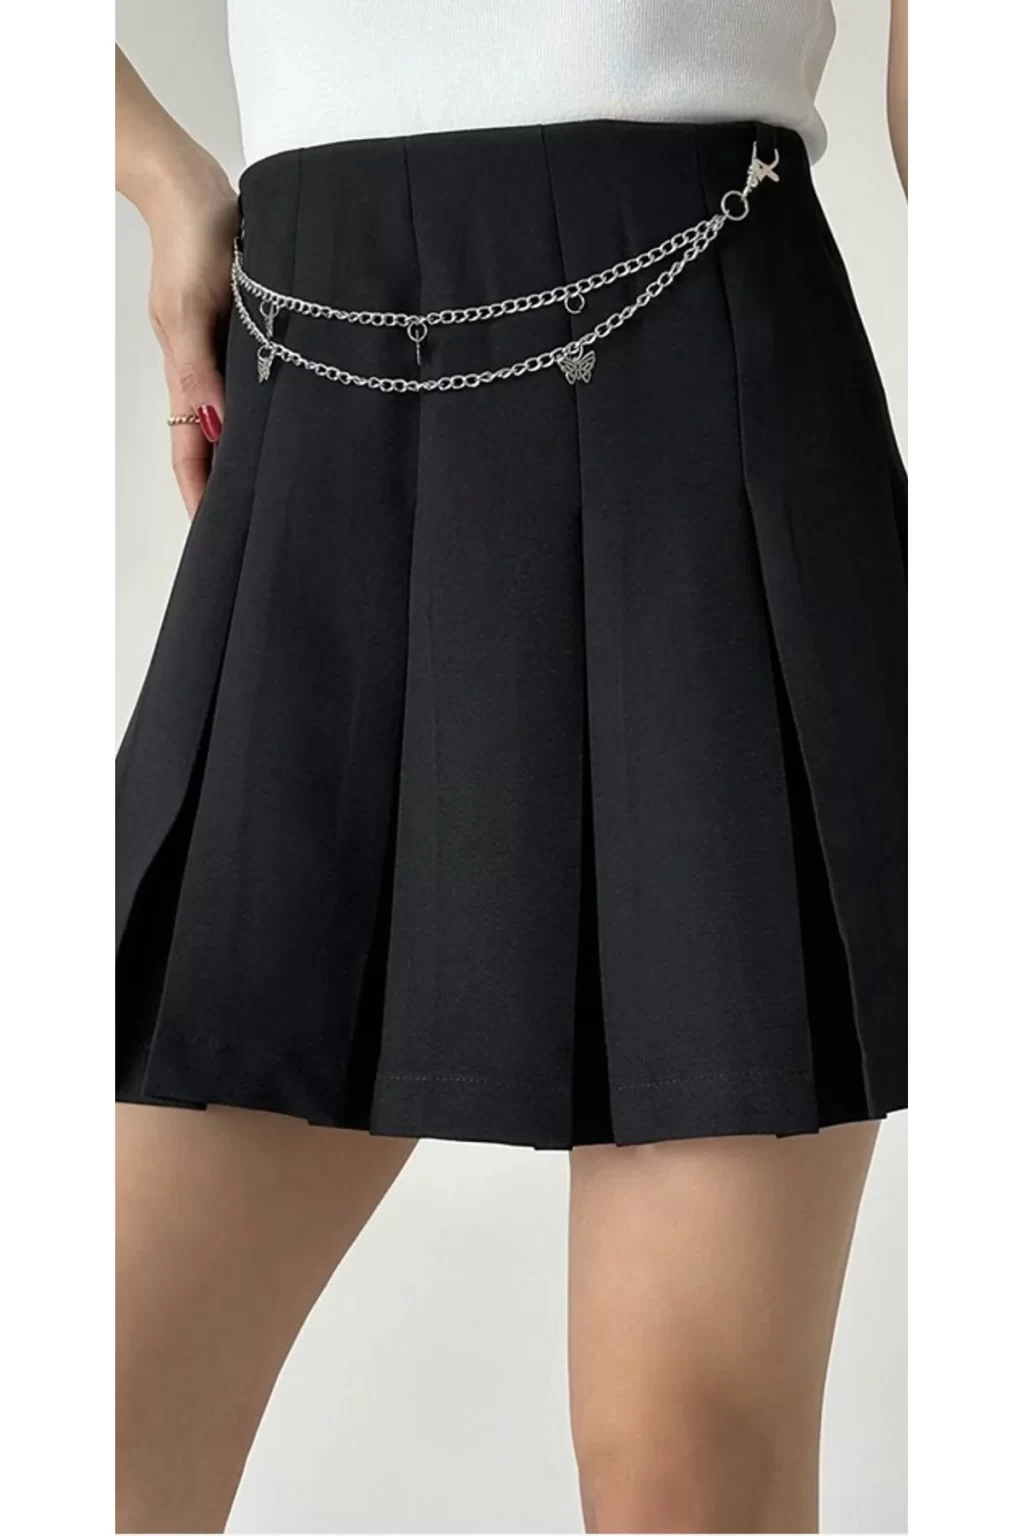 Chain Detailed Pleated Black Mini Skirt